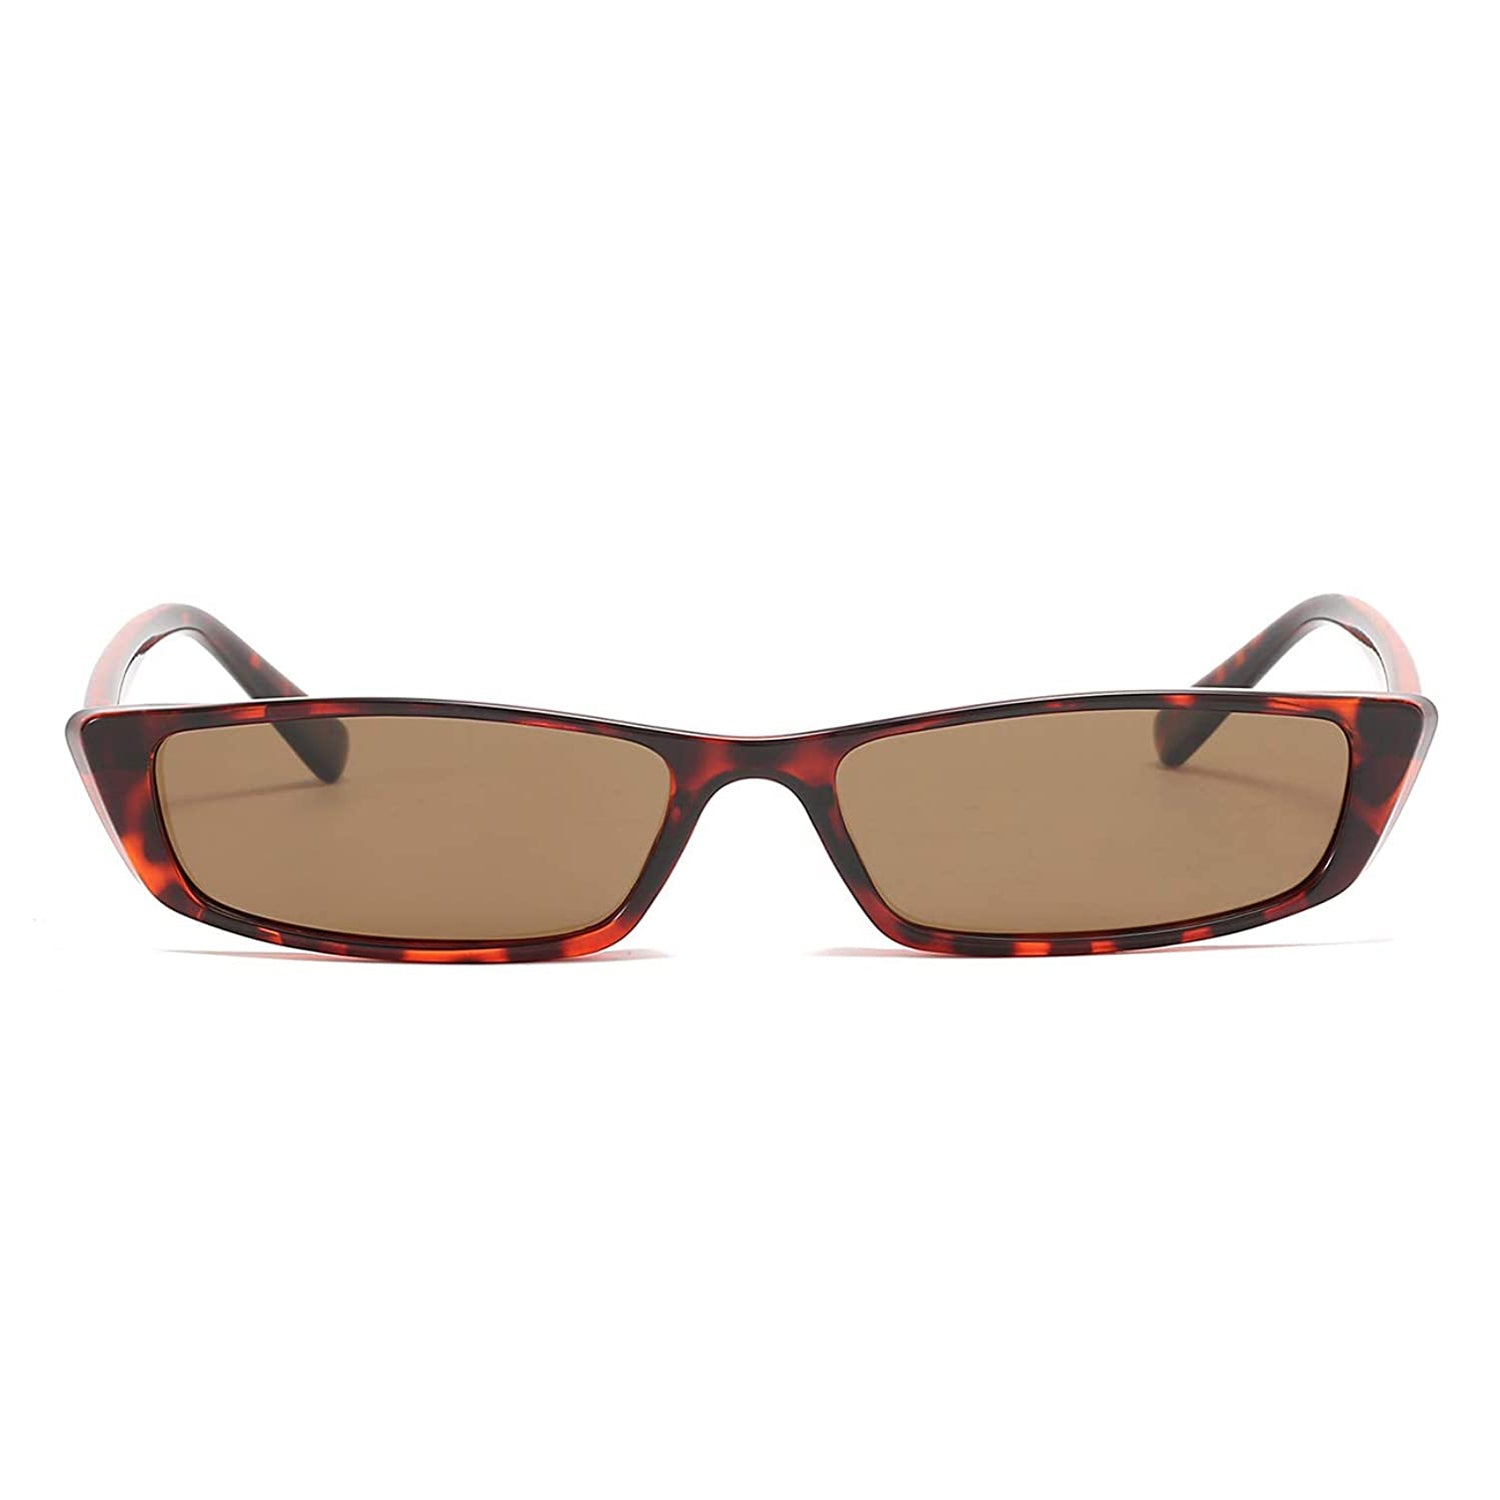 LVIOE Vintage Rectangle Small Frame Sunglasses, Tortoise - LVIOE